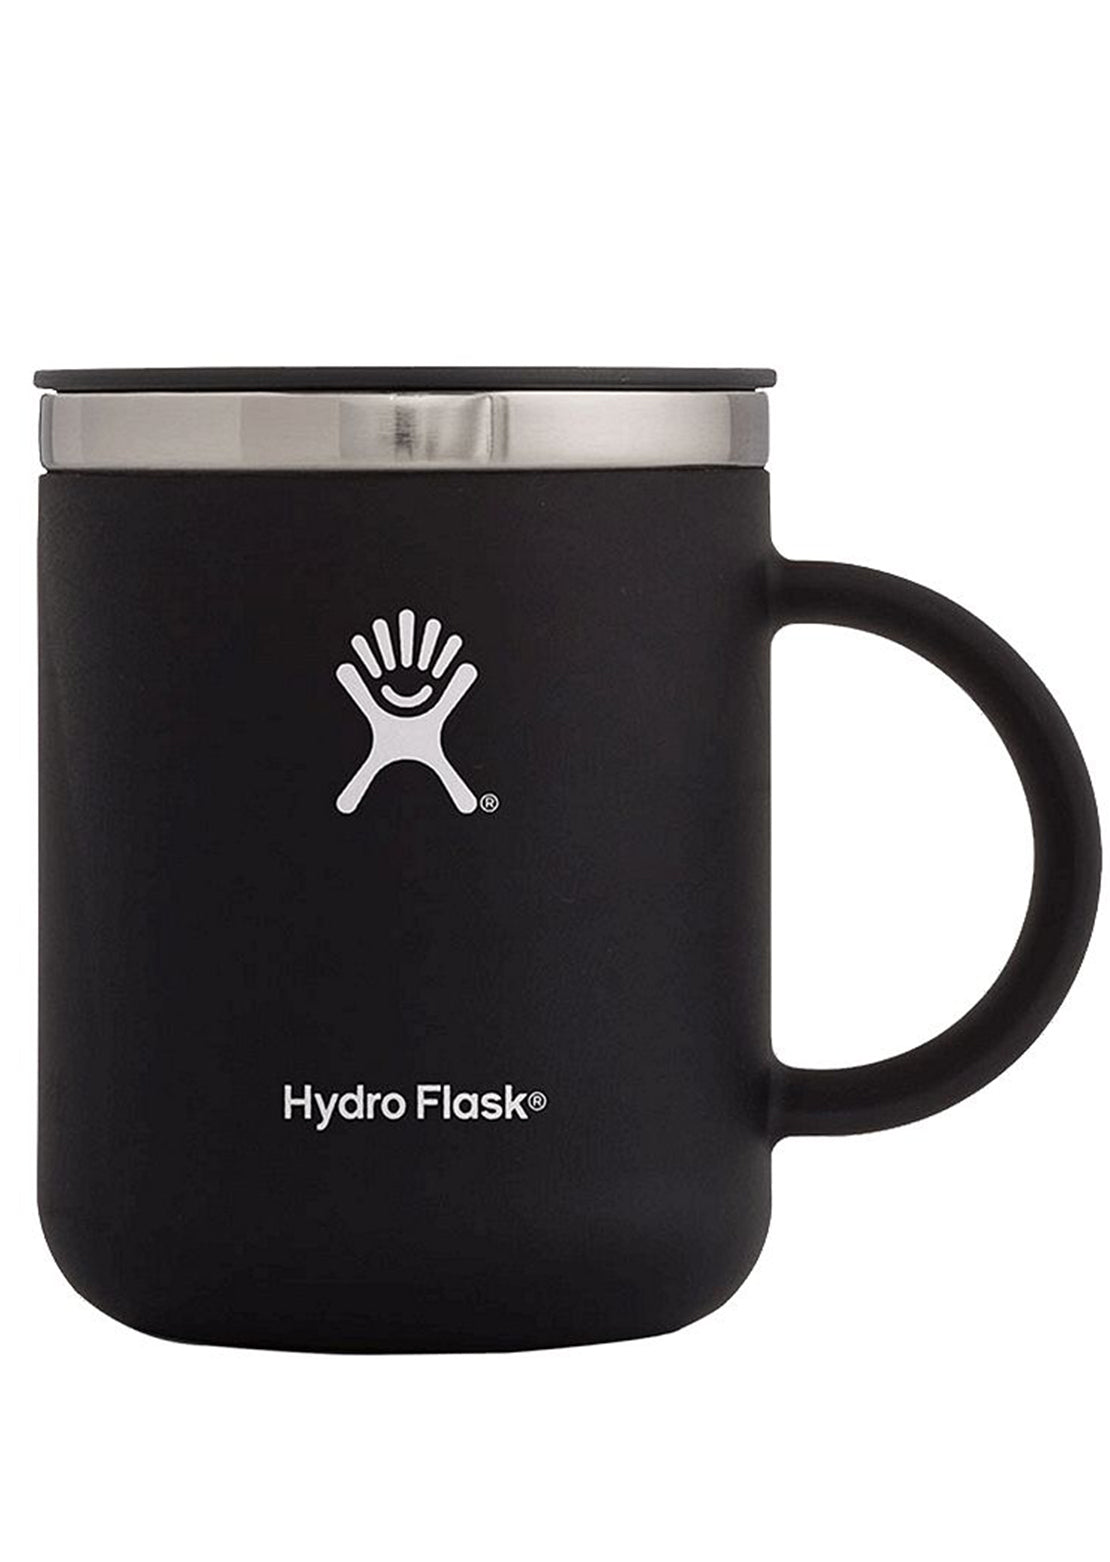 Hydro Flask 12oz Coffee Mug Black